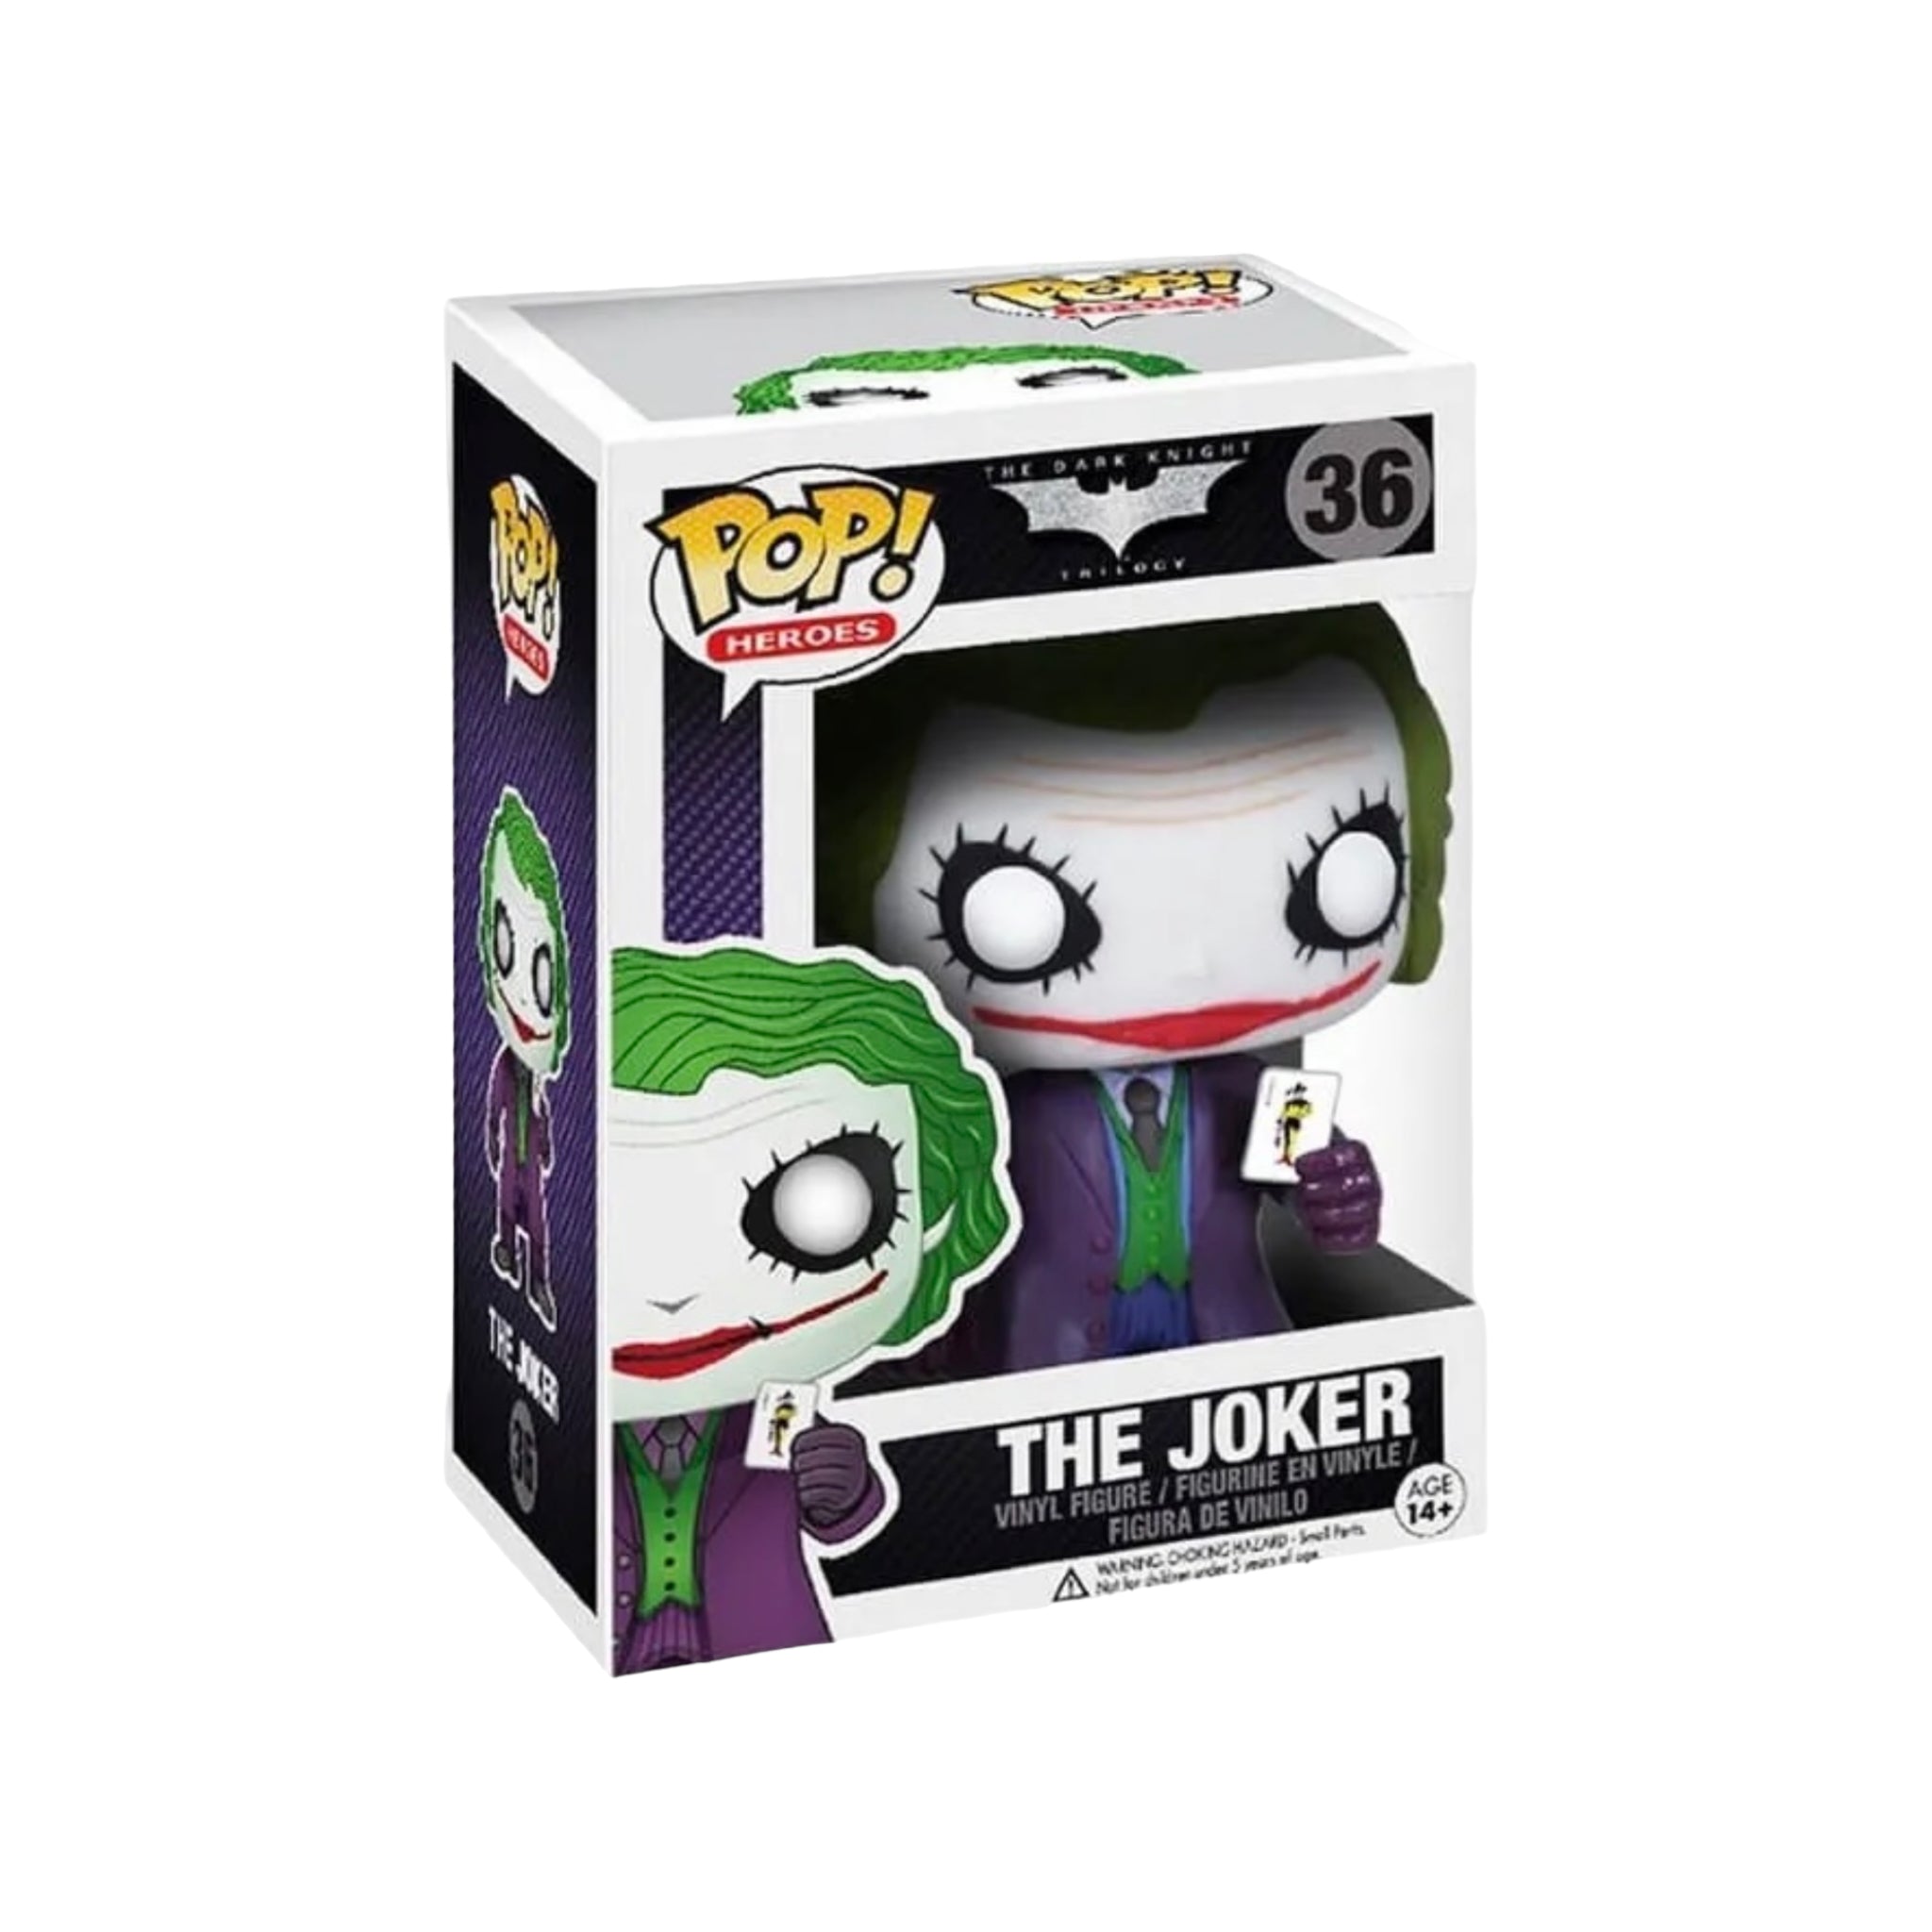 The Joker #36 Funko Pop! - The Dark Knight Trilogy